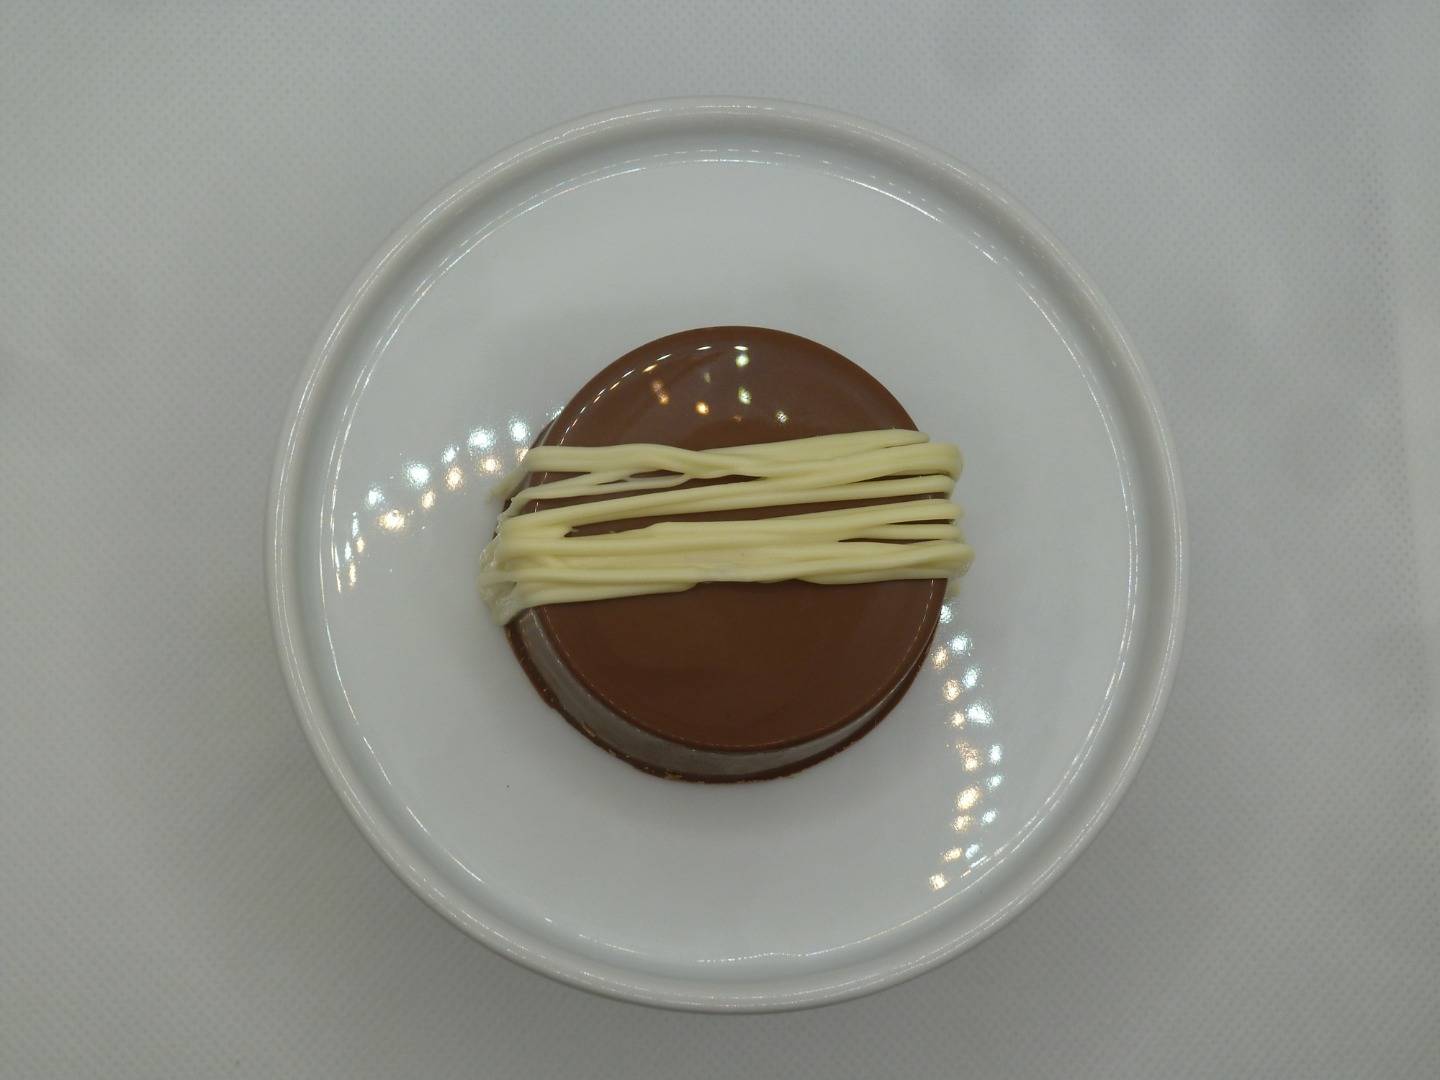 Oreo Chocolat au Lait - Missys Gourmandises Douces - 01